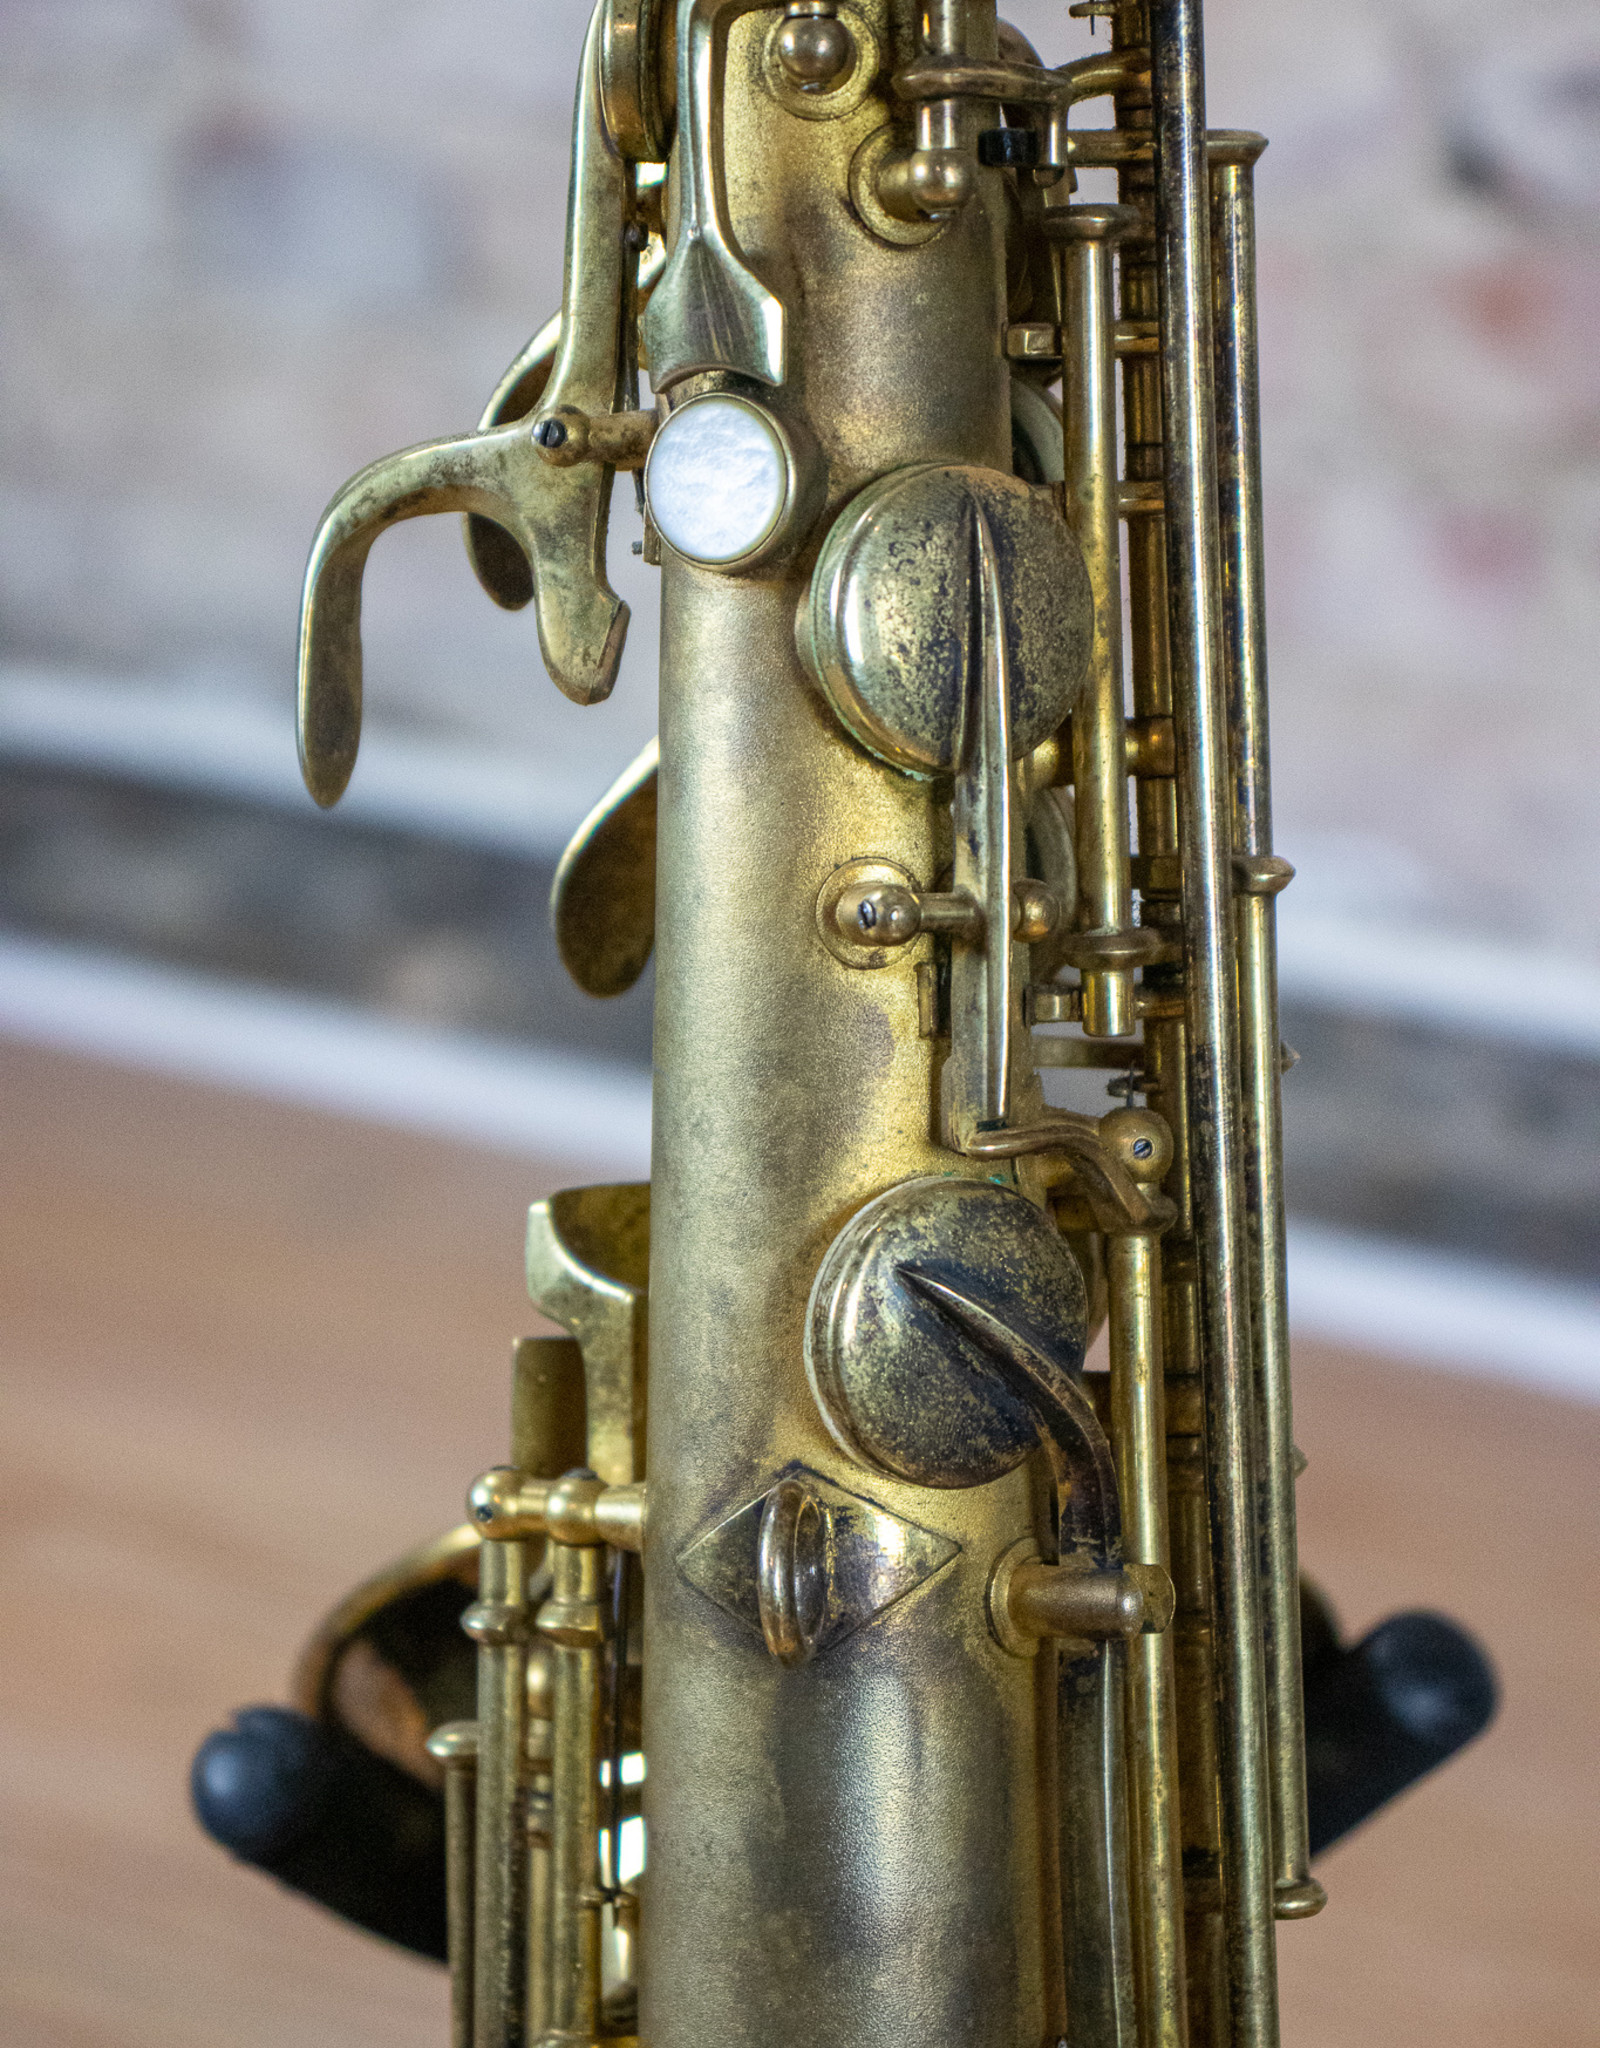 Conn As-Is 1926 Conn New Wonder "Chu Berry" Alto Saxophone